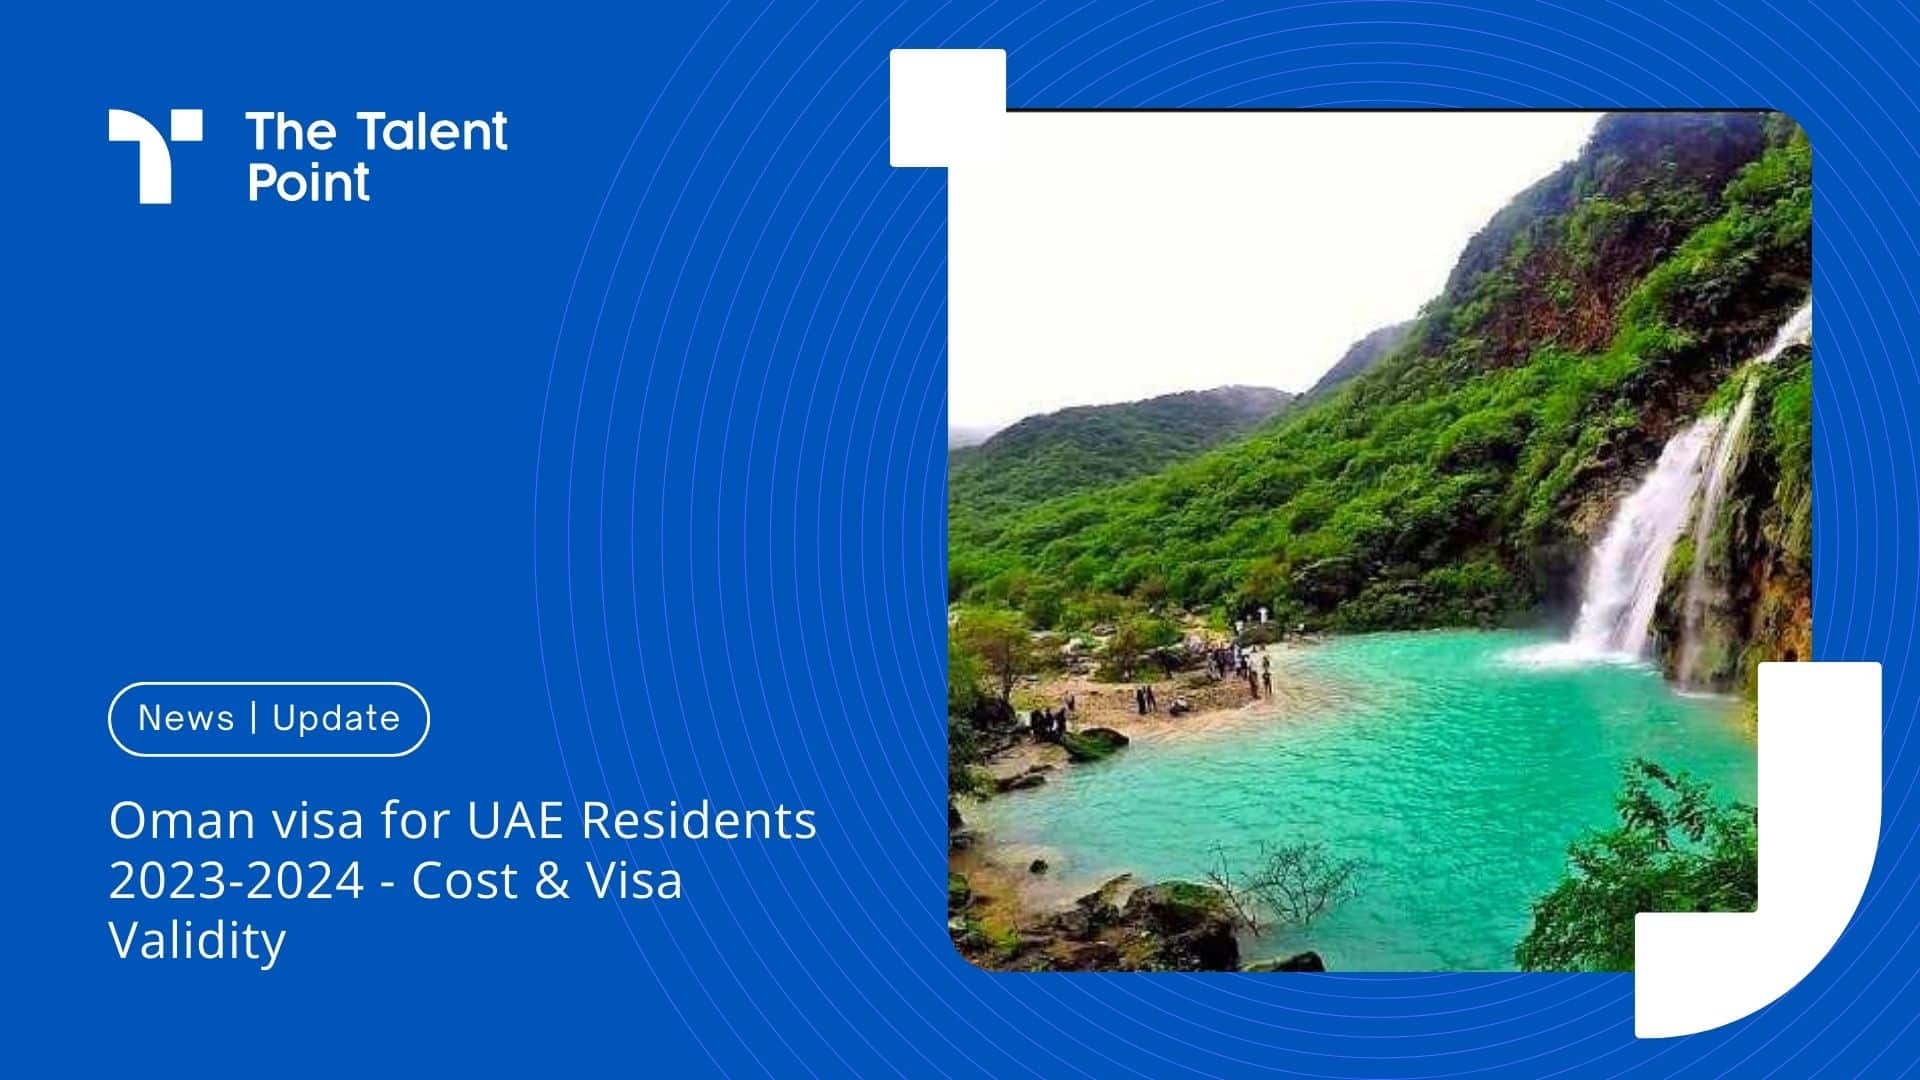 Oman visa for UAE Residents 2023-2024 - Cost & Visa Validity - TalentPoint